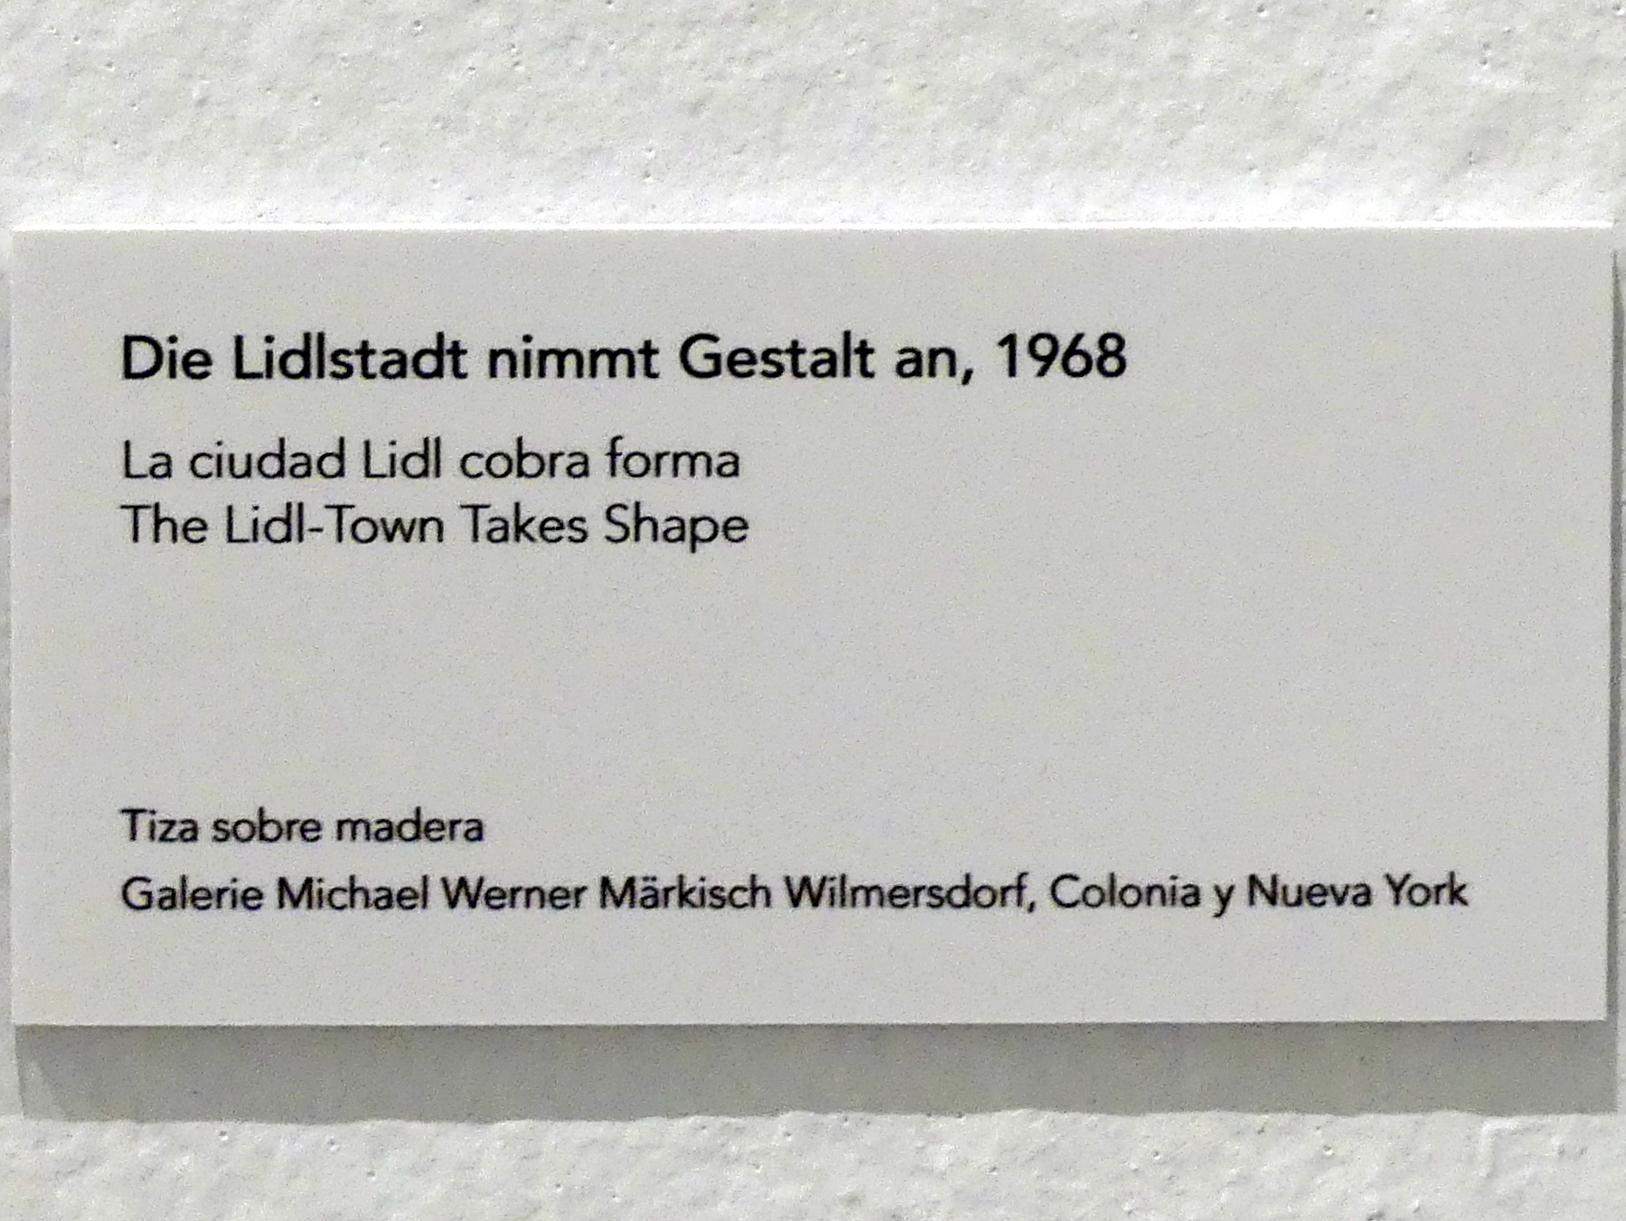 Jörg Immendorff (1965–2007), Die Lidlstadt nimmt Gestalt an, Madrid, Museo Reina Sofía, Ausstellung "Jörg Immendorff - The Task of the Painter" vom 30.10.2019-13.04.2020, Saal 1, 1968, Bild 5/5